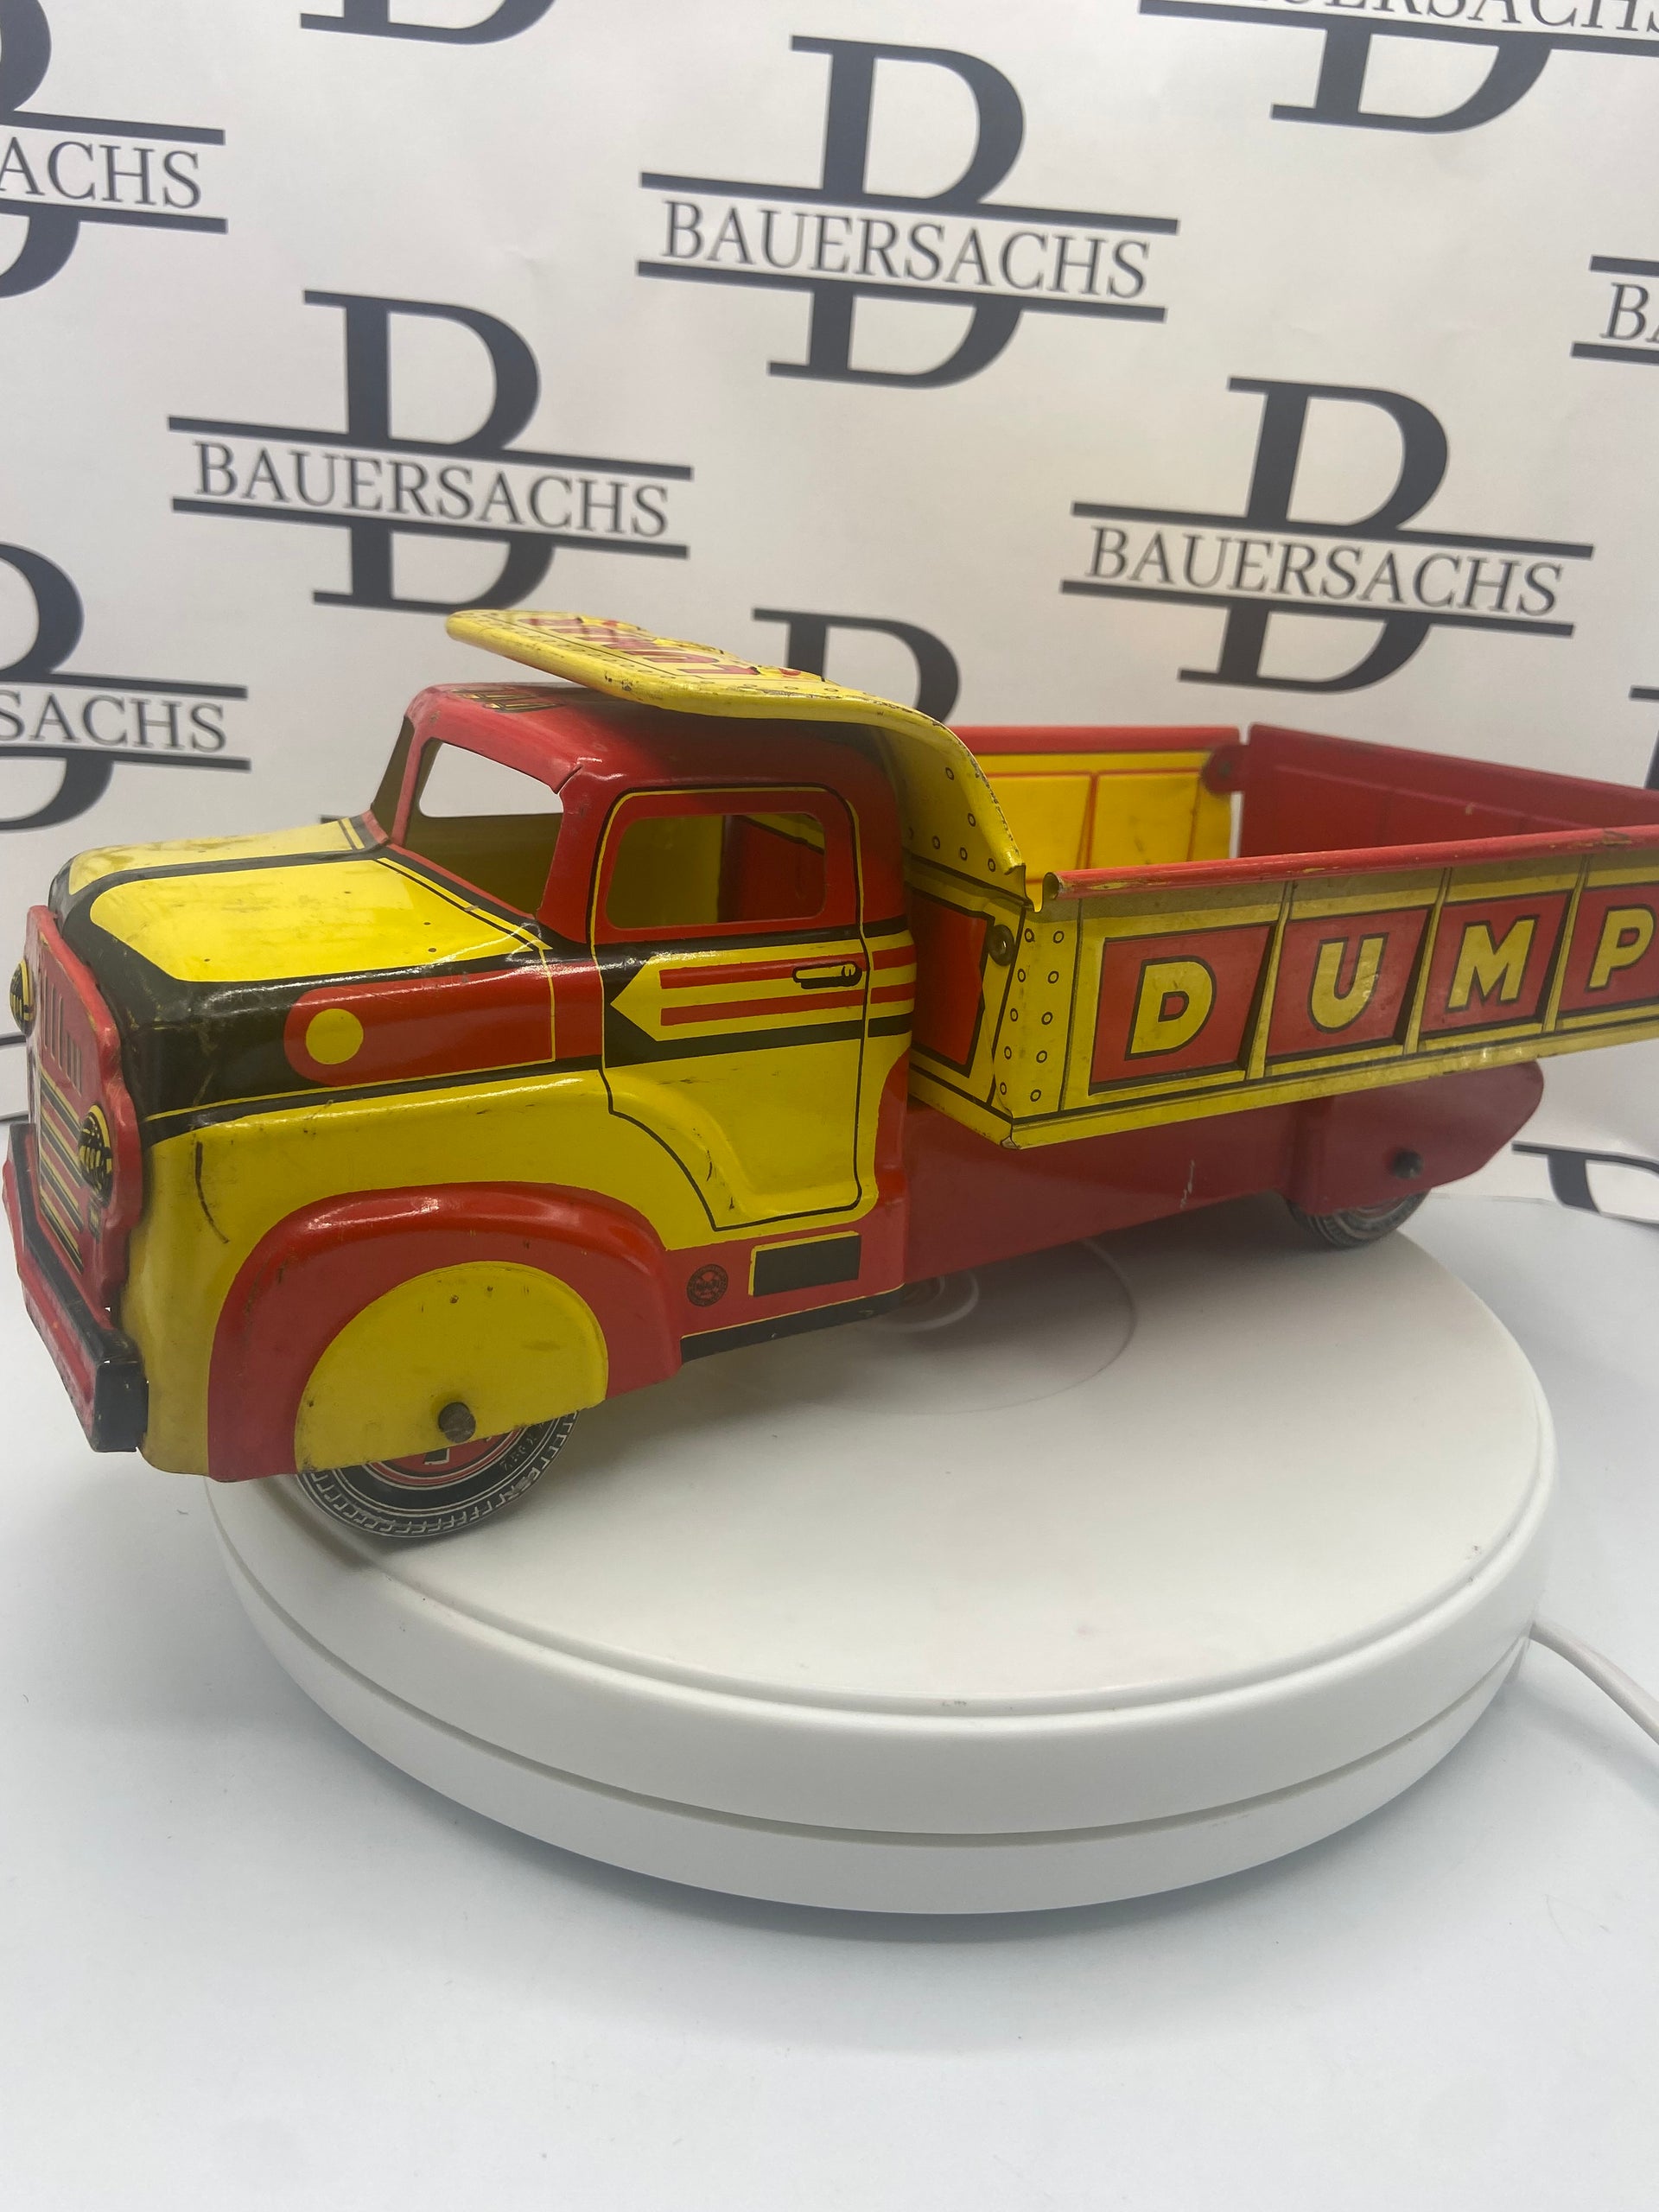 Pressed Steel Lumar Dump Truck Bauersachs’ Timeless Toys